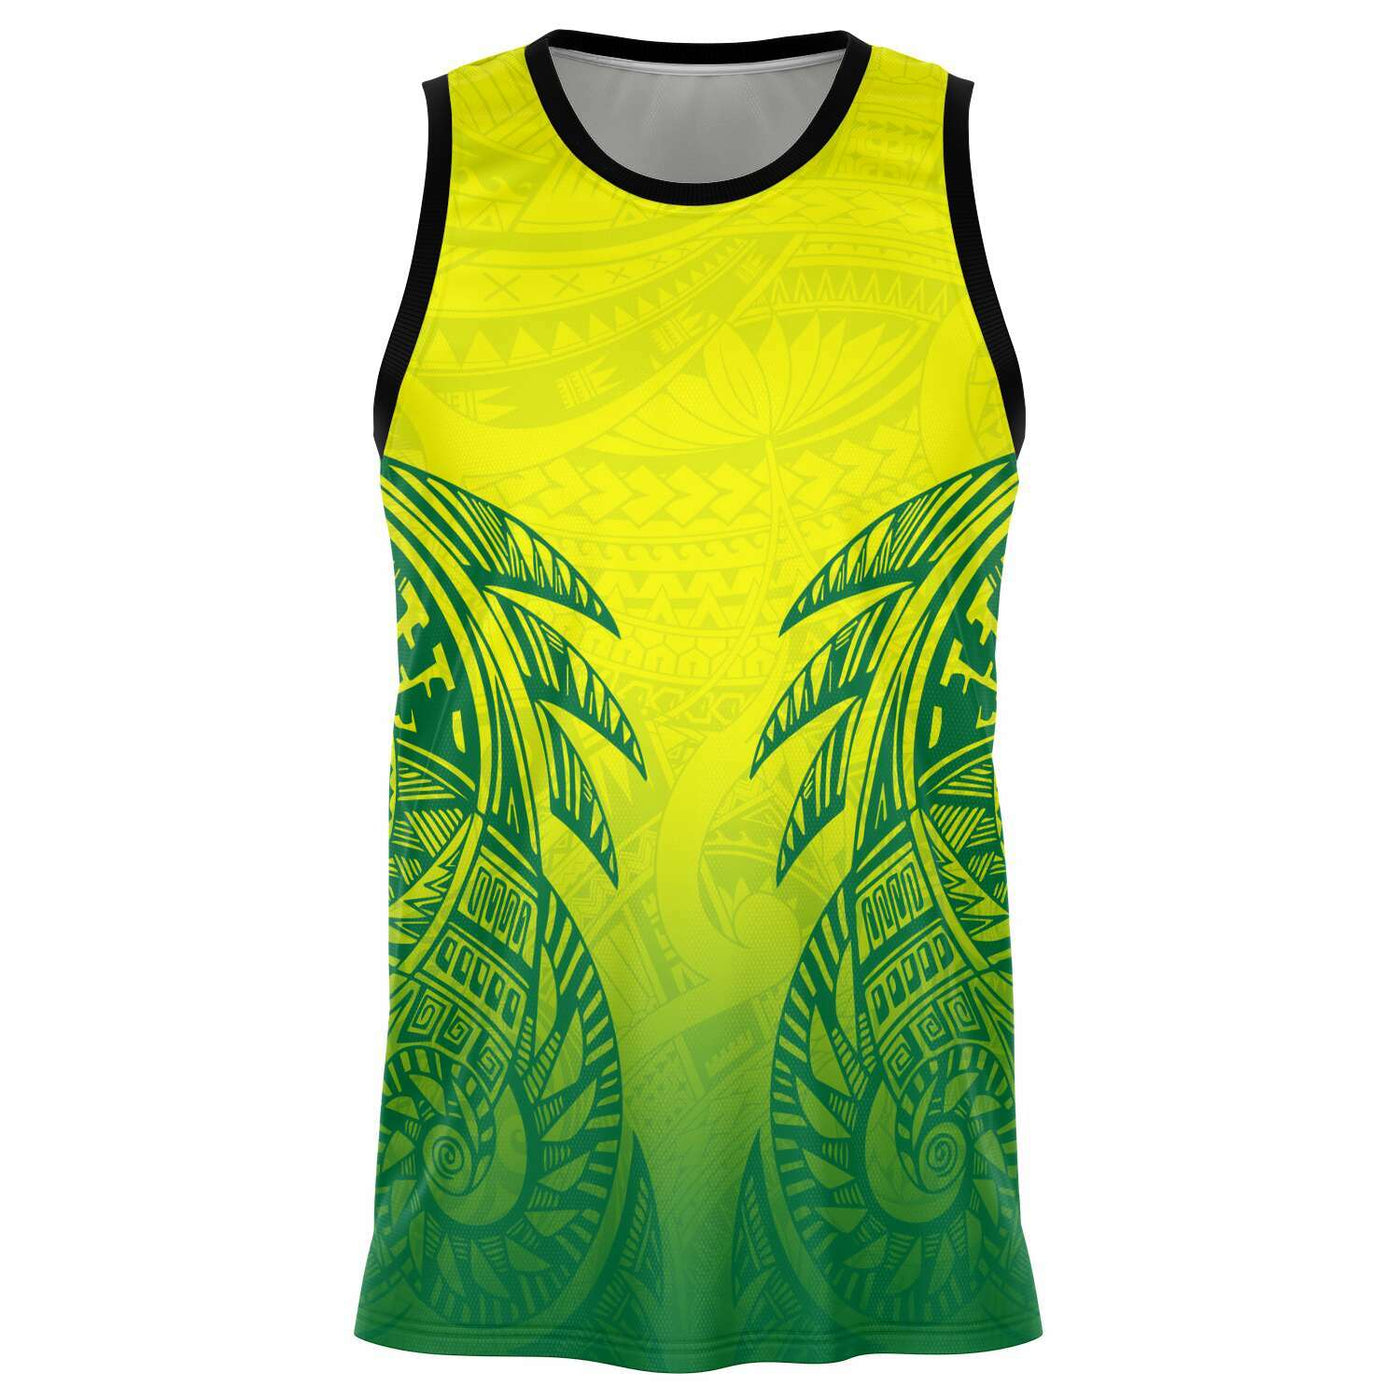 Subliminator Polynesian Tribal Basketball Jersey Green